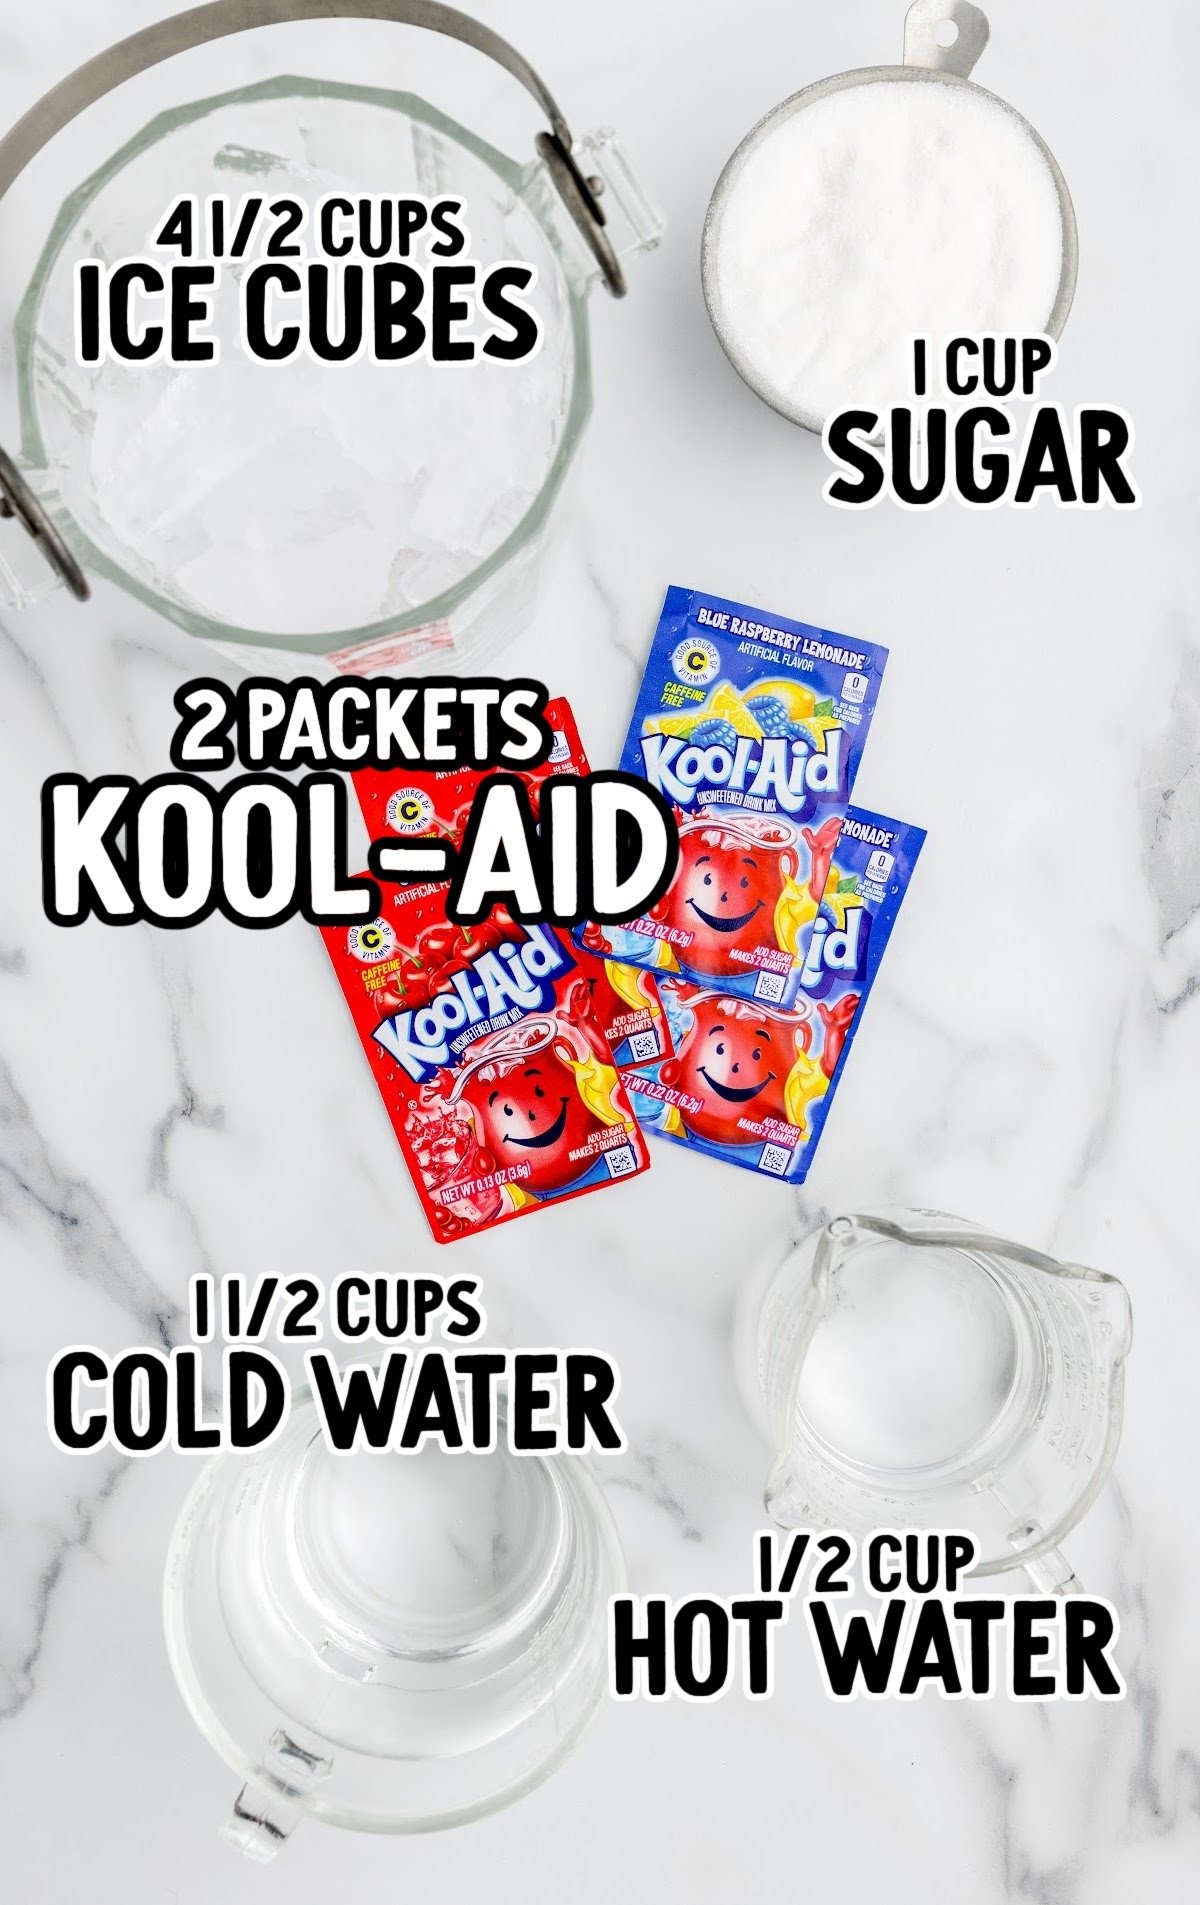 Kool-Aid Slurpee raw ingredients that are labeled